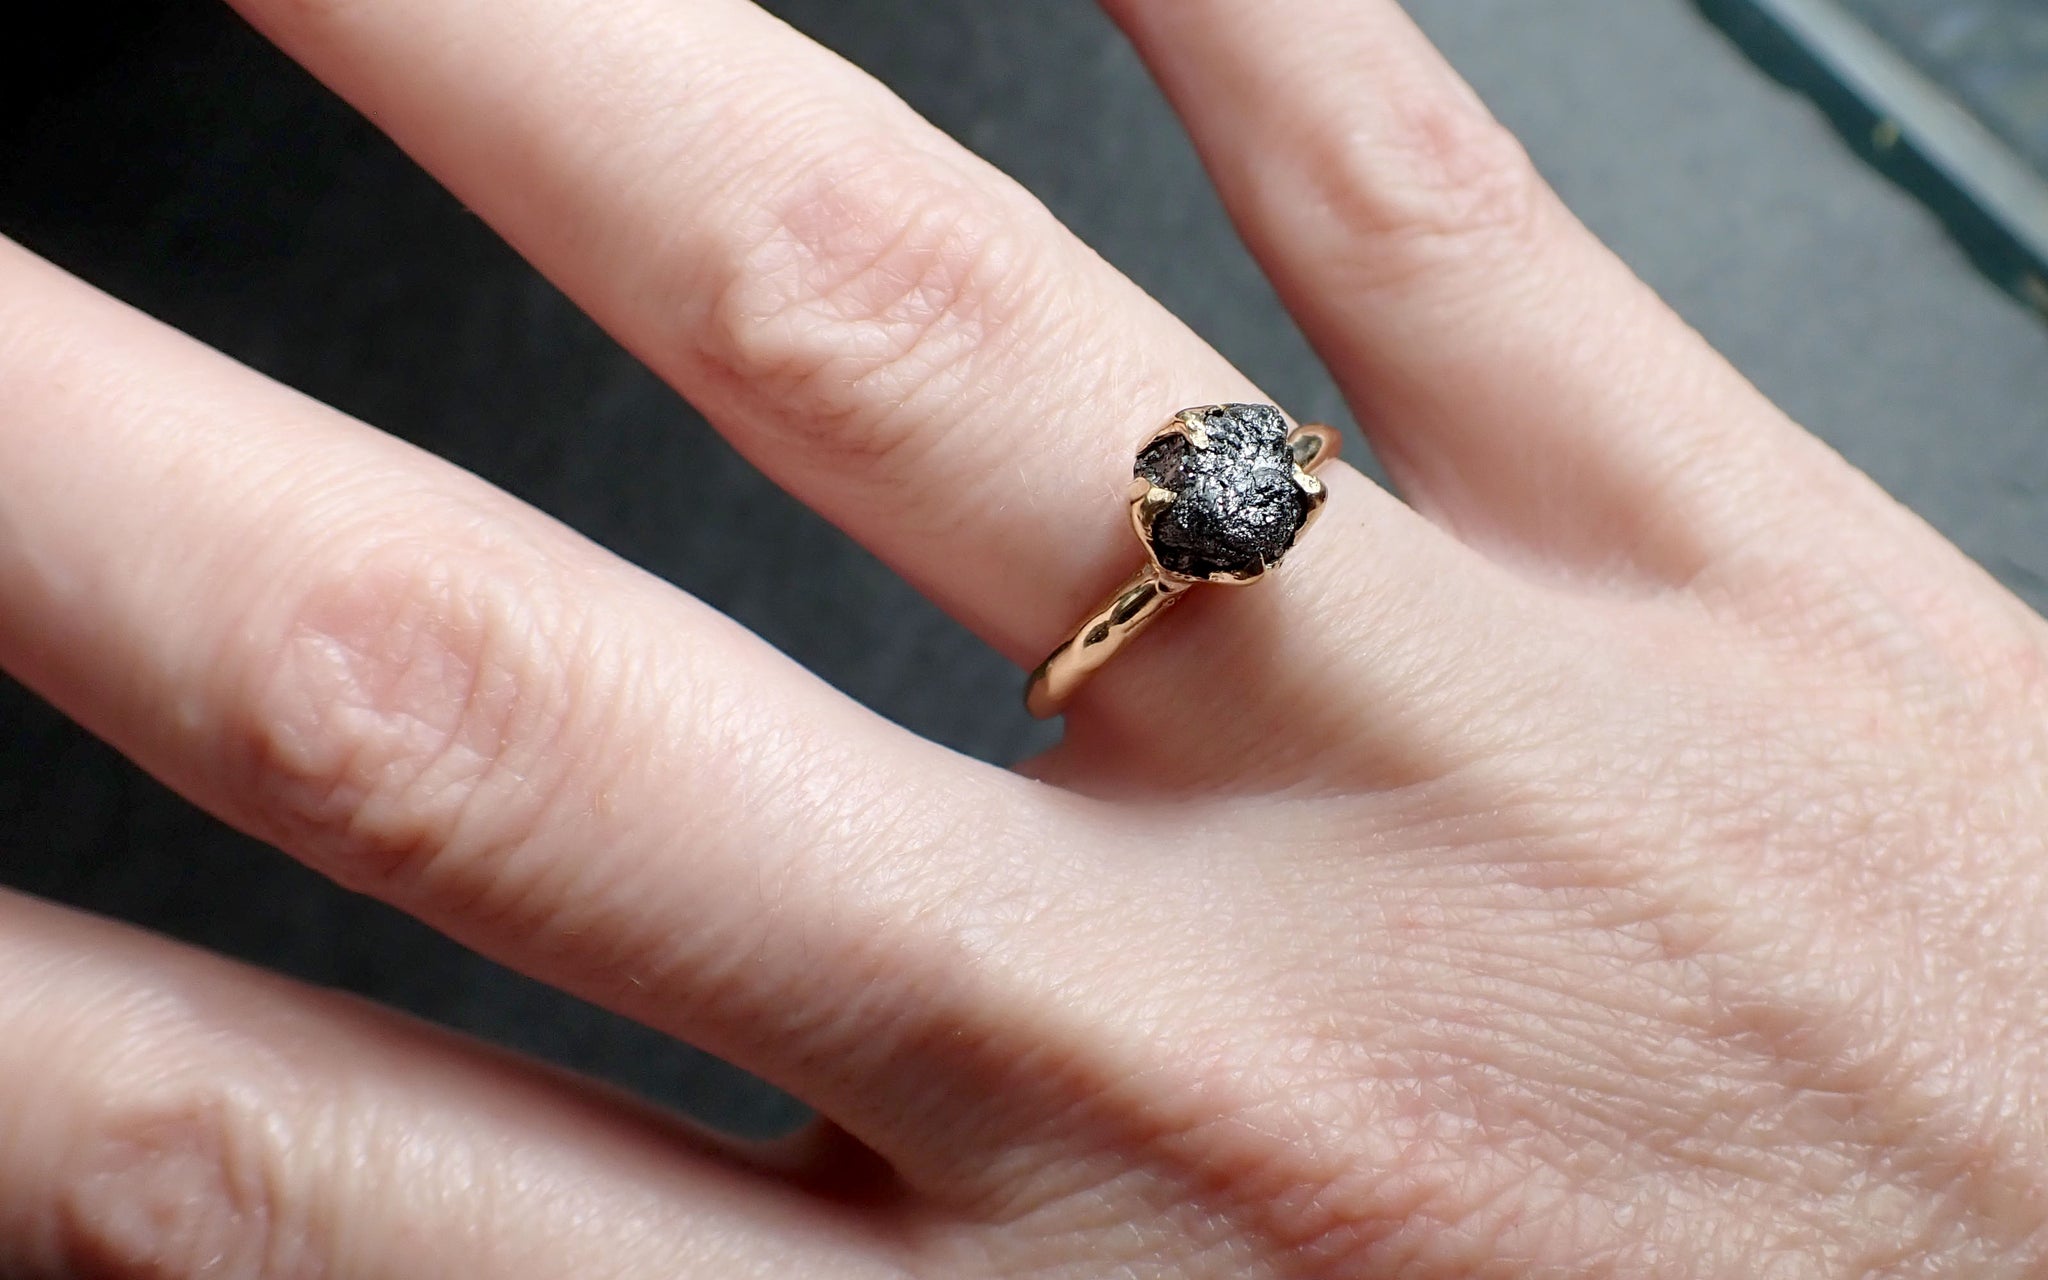 Raw Diamond Solitaire Engagement Ring Rough Uncut gemstone gold Conflict Free Black Diamond Wedding Promise 2559